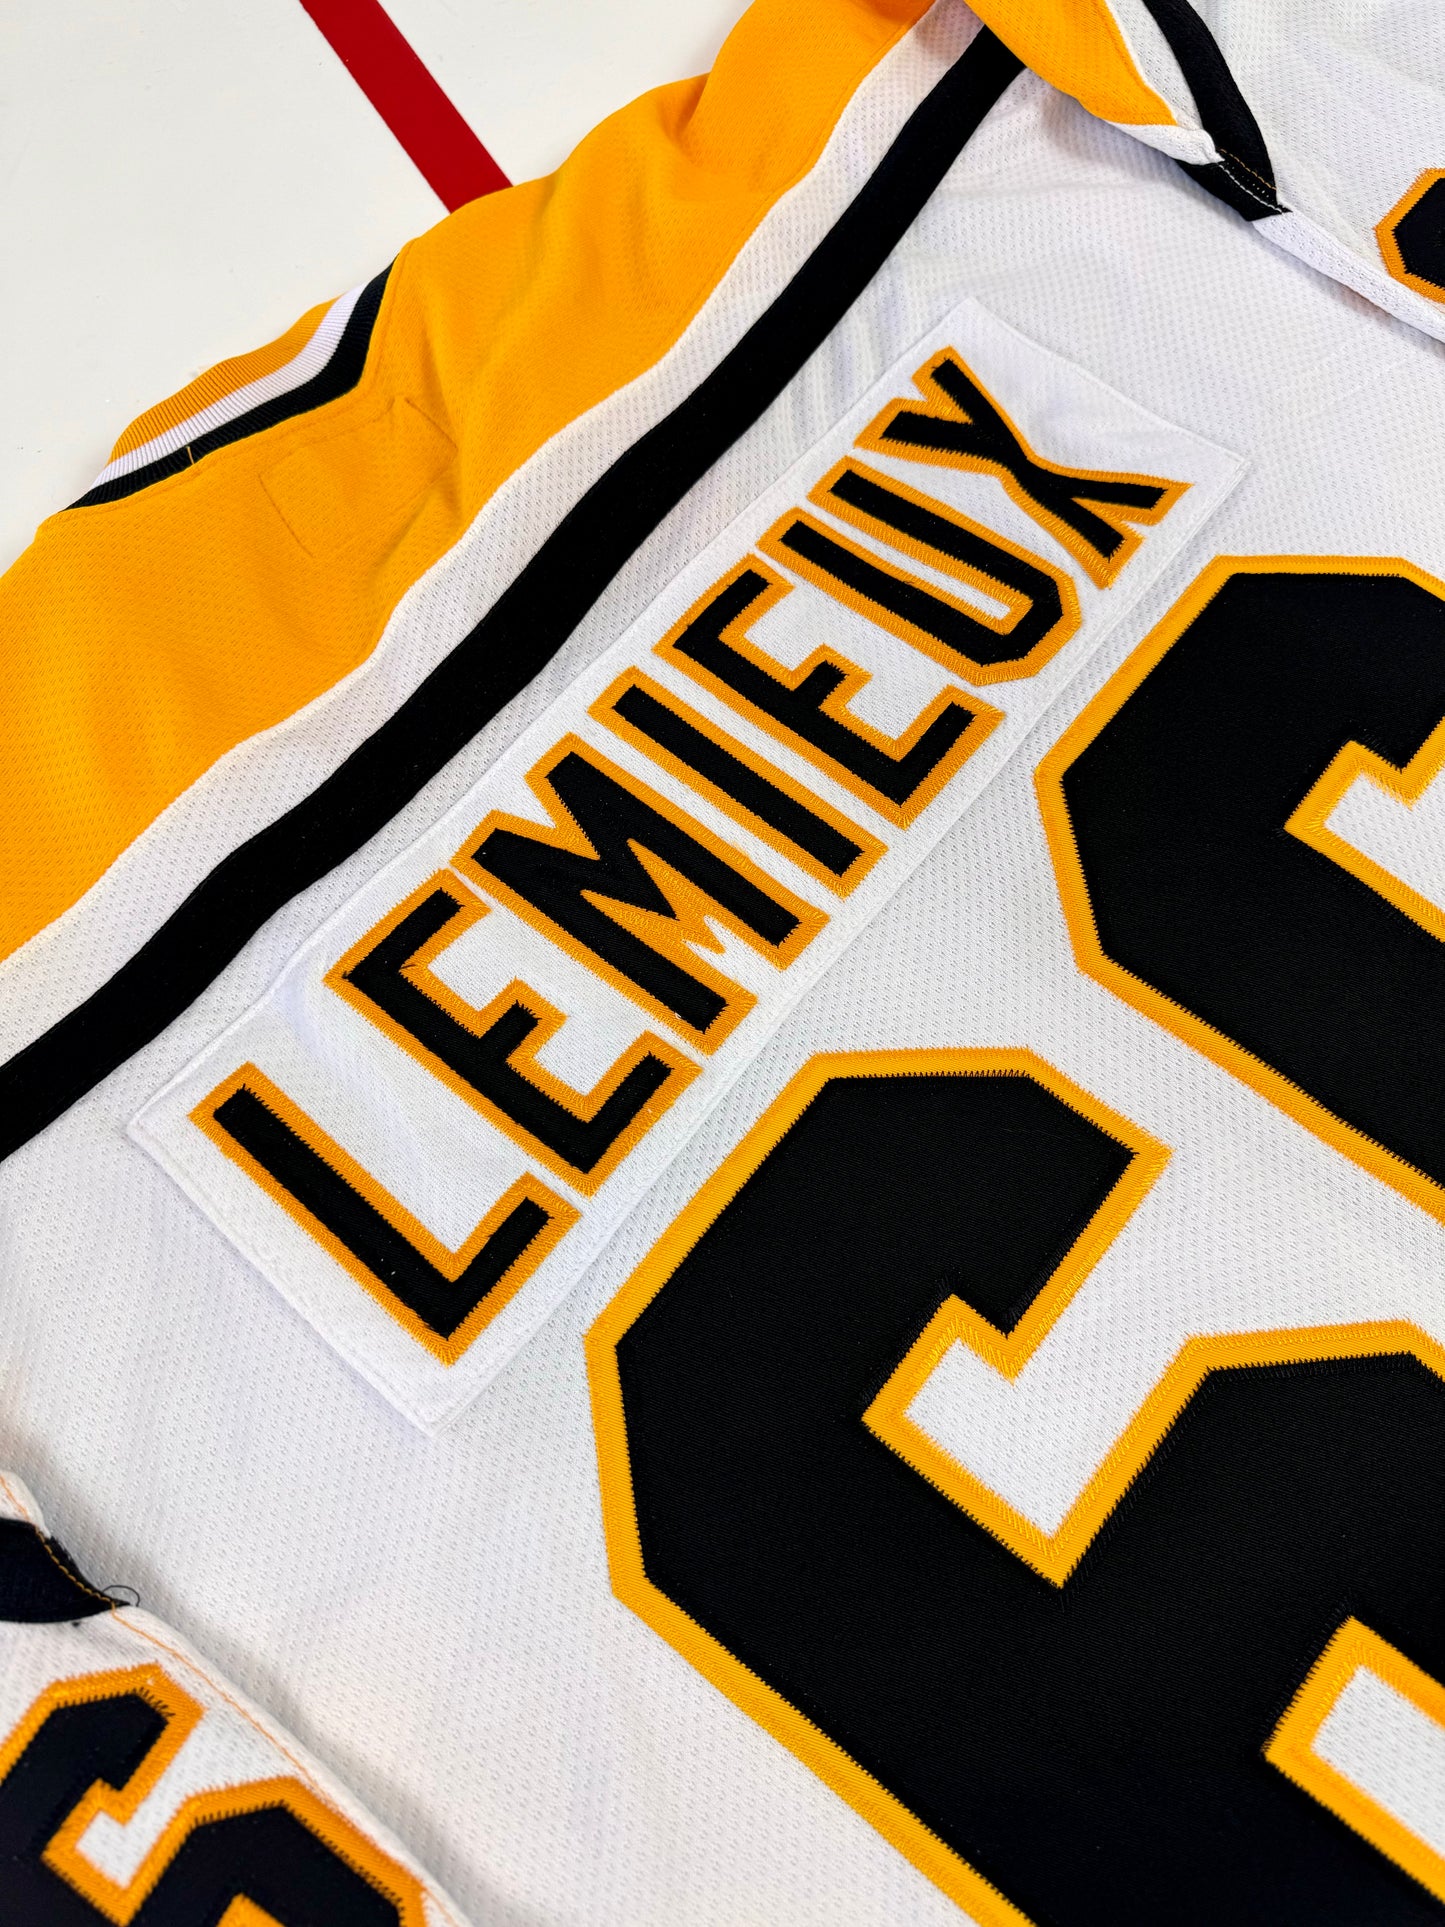 Pittsburgh Penguins 1992-1996 Mario Lemieux NHL Hockey Jersey (XXL)